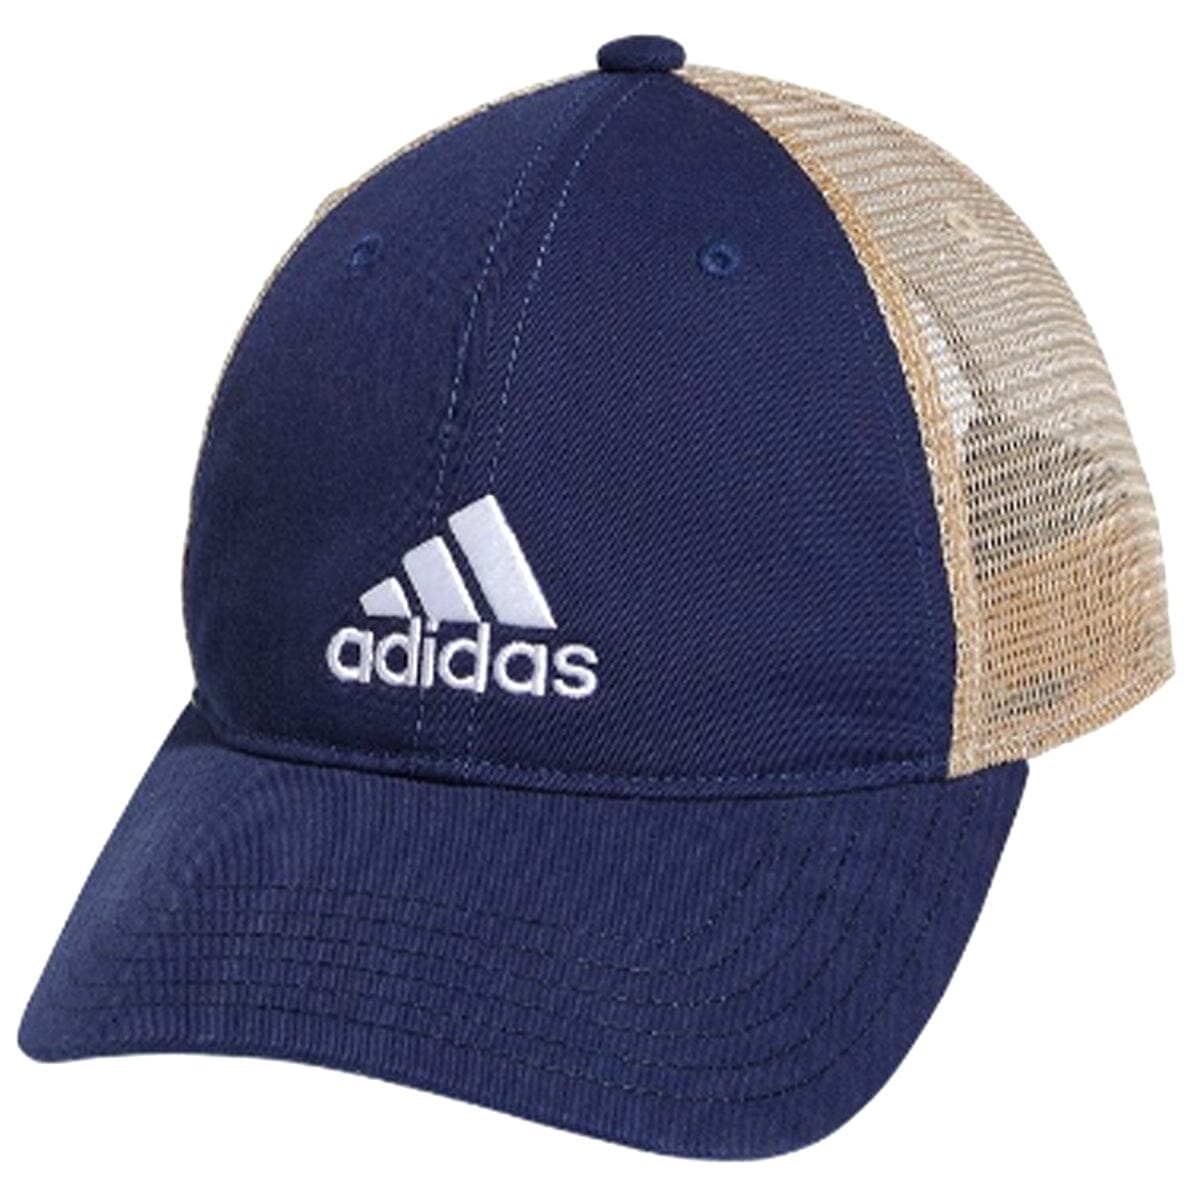 adidas Men's Relaxed Mesh Snapback Hat Accessories Adidas OSFA Team Navy Blue / White / Khaki 